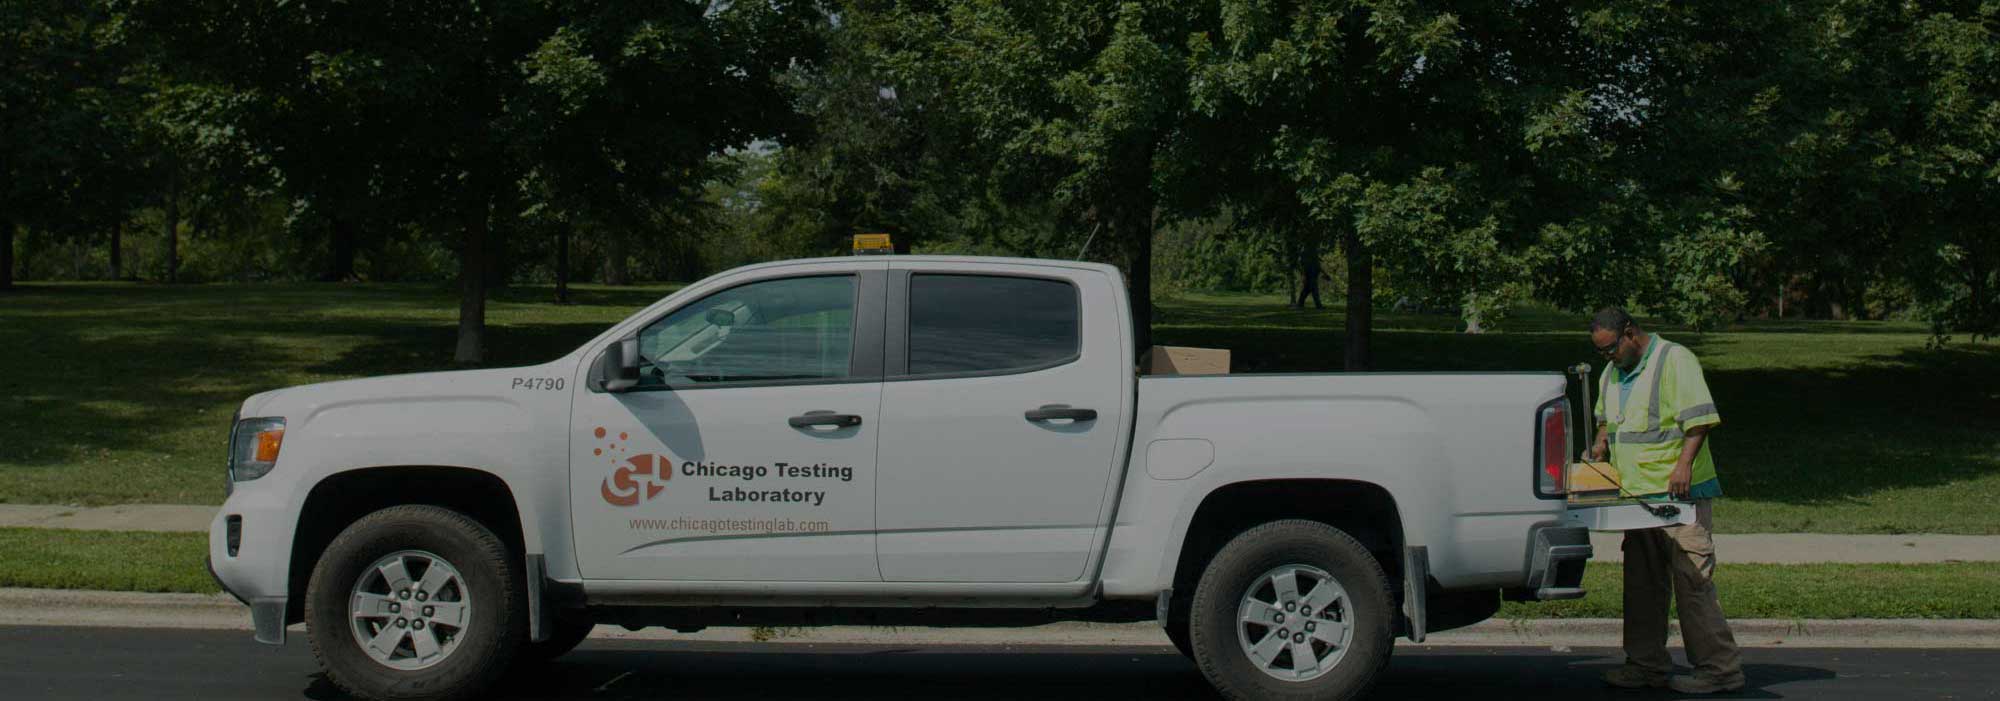 Chicago Testing Laboratory truck.